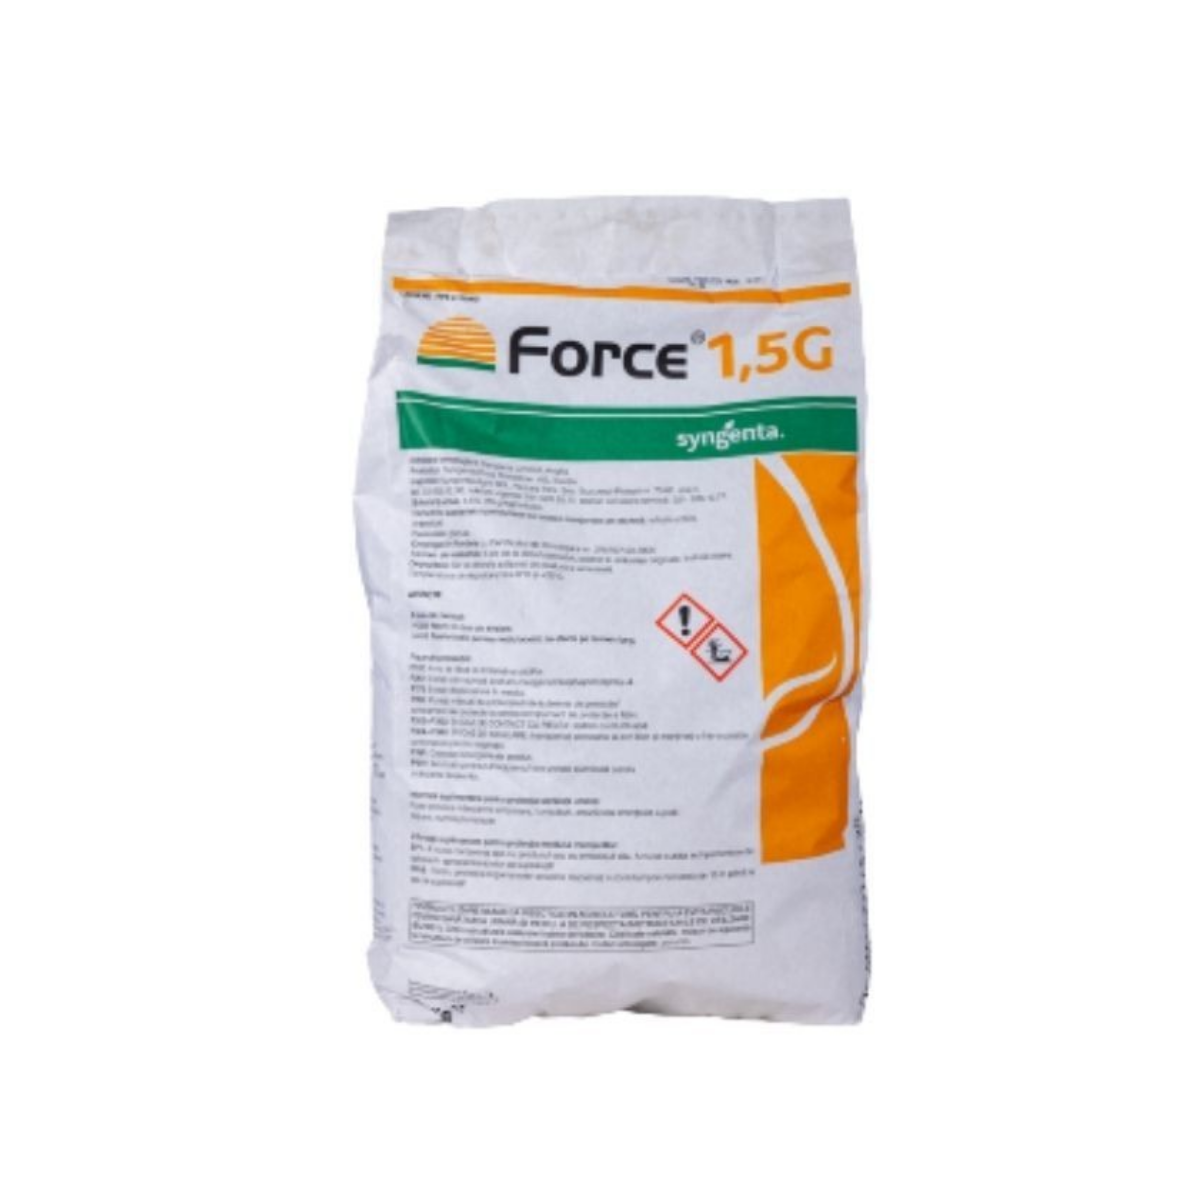 Insecticide - Insecticid de baza in combaterea daunatorilor din sol Force 1.5 G, 20 Kg, hectarul.ro